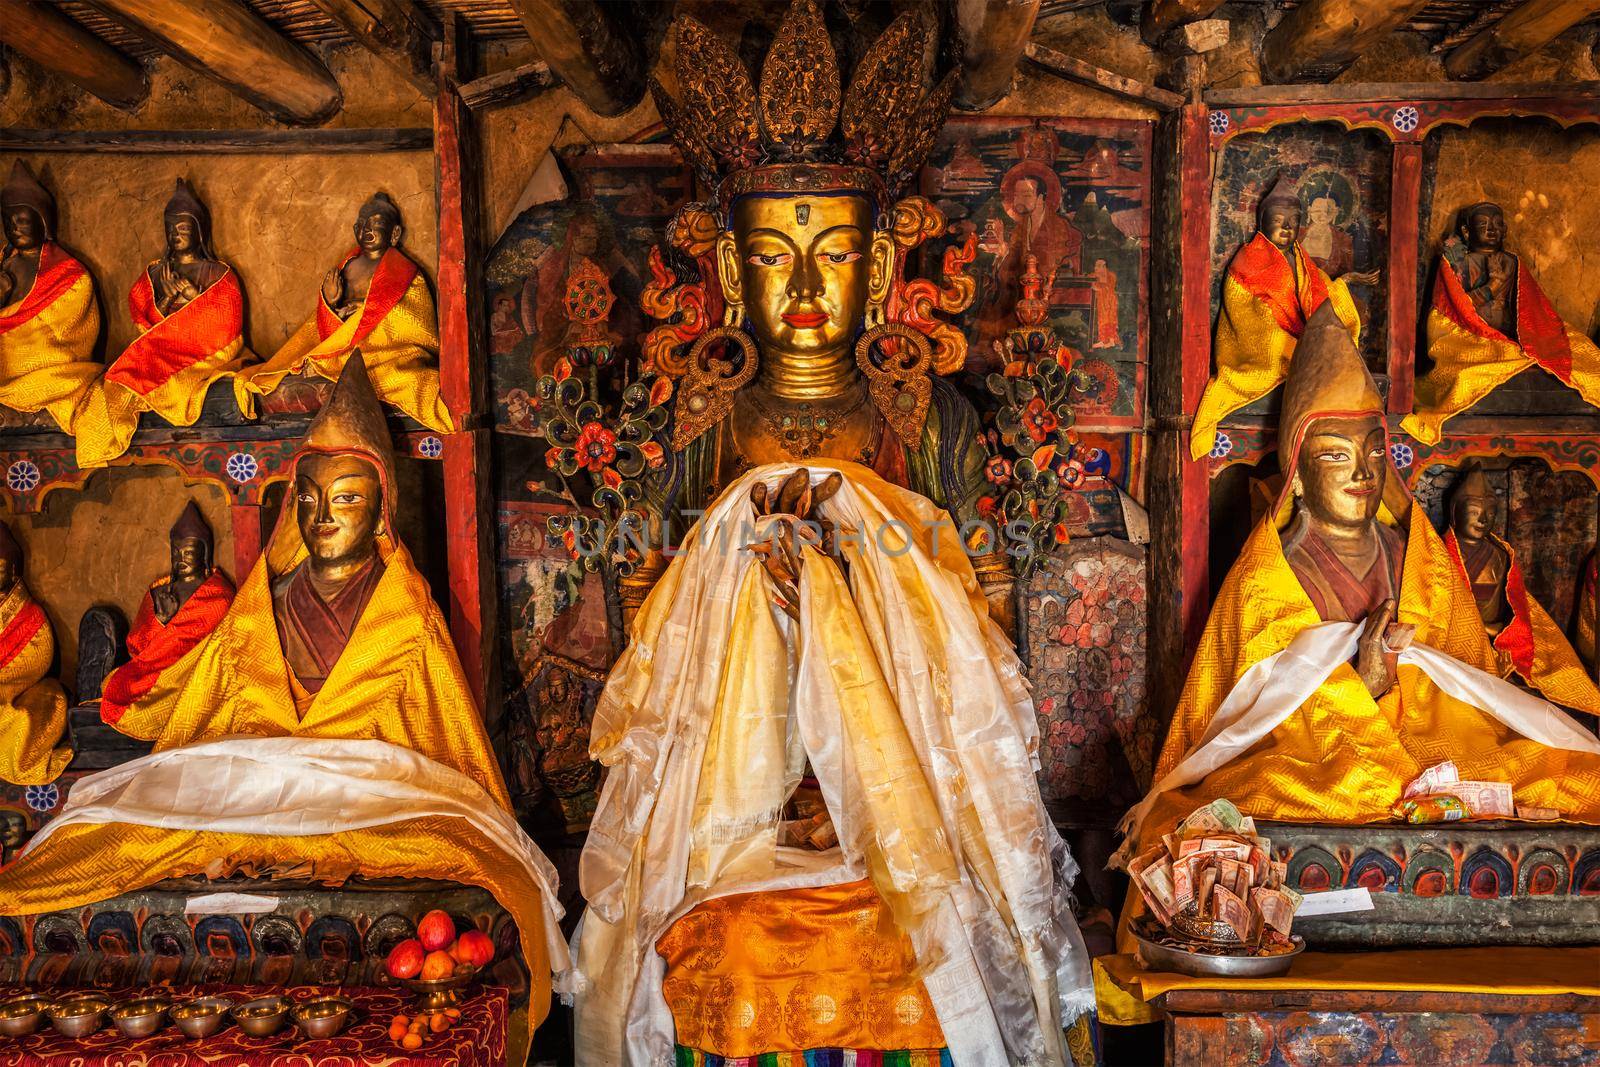 Maitreya Buddha statue by dimol